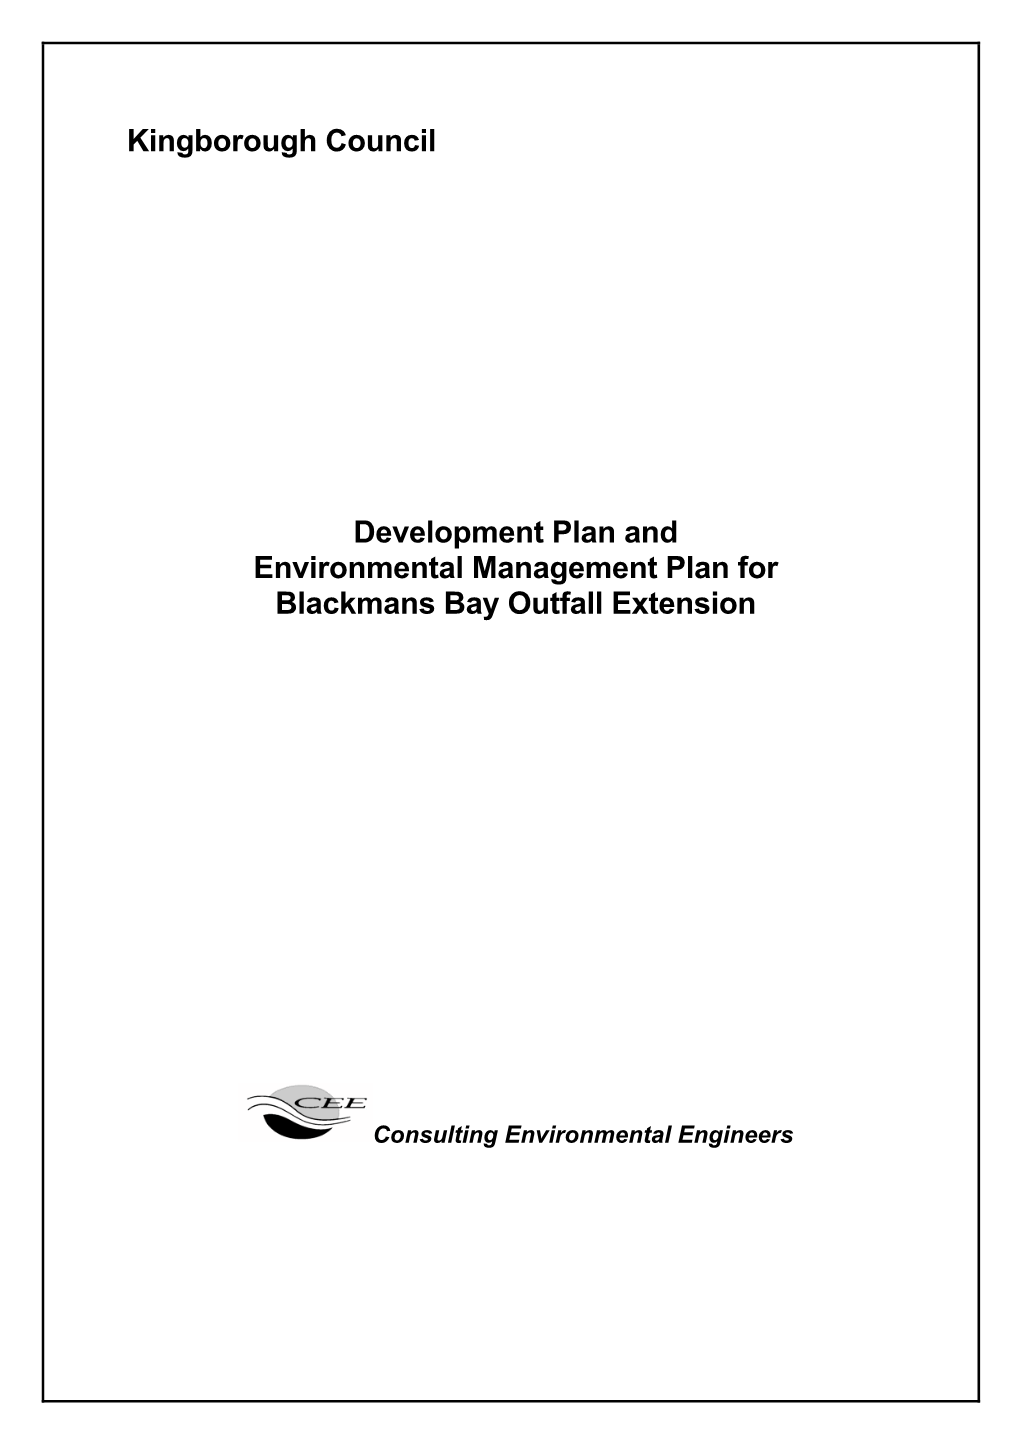 Kingborough Council Development Plan and Environmental